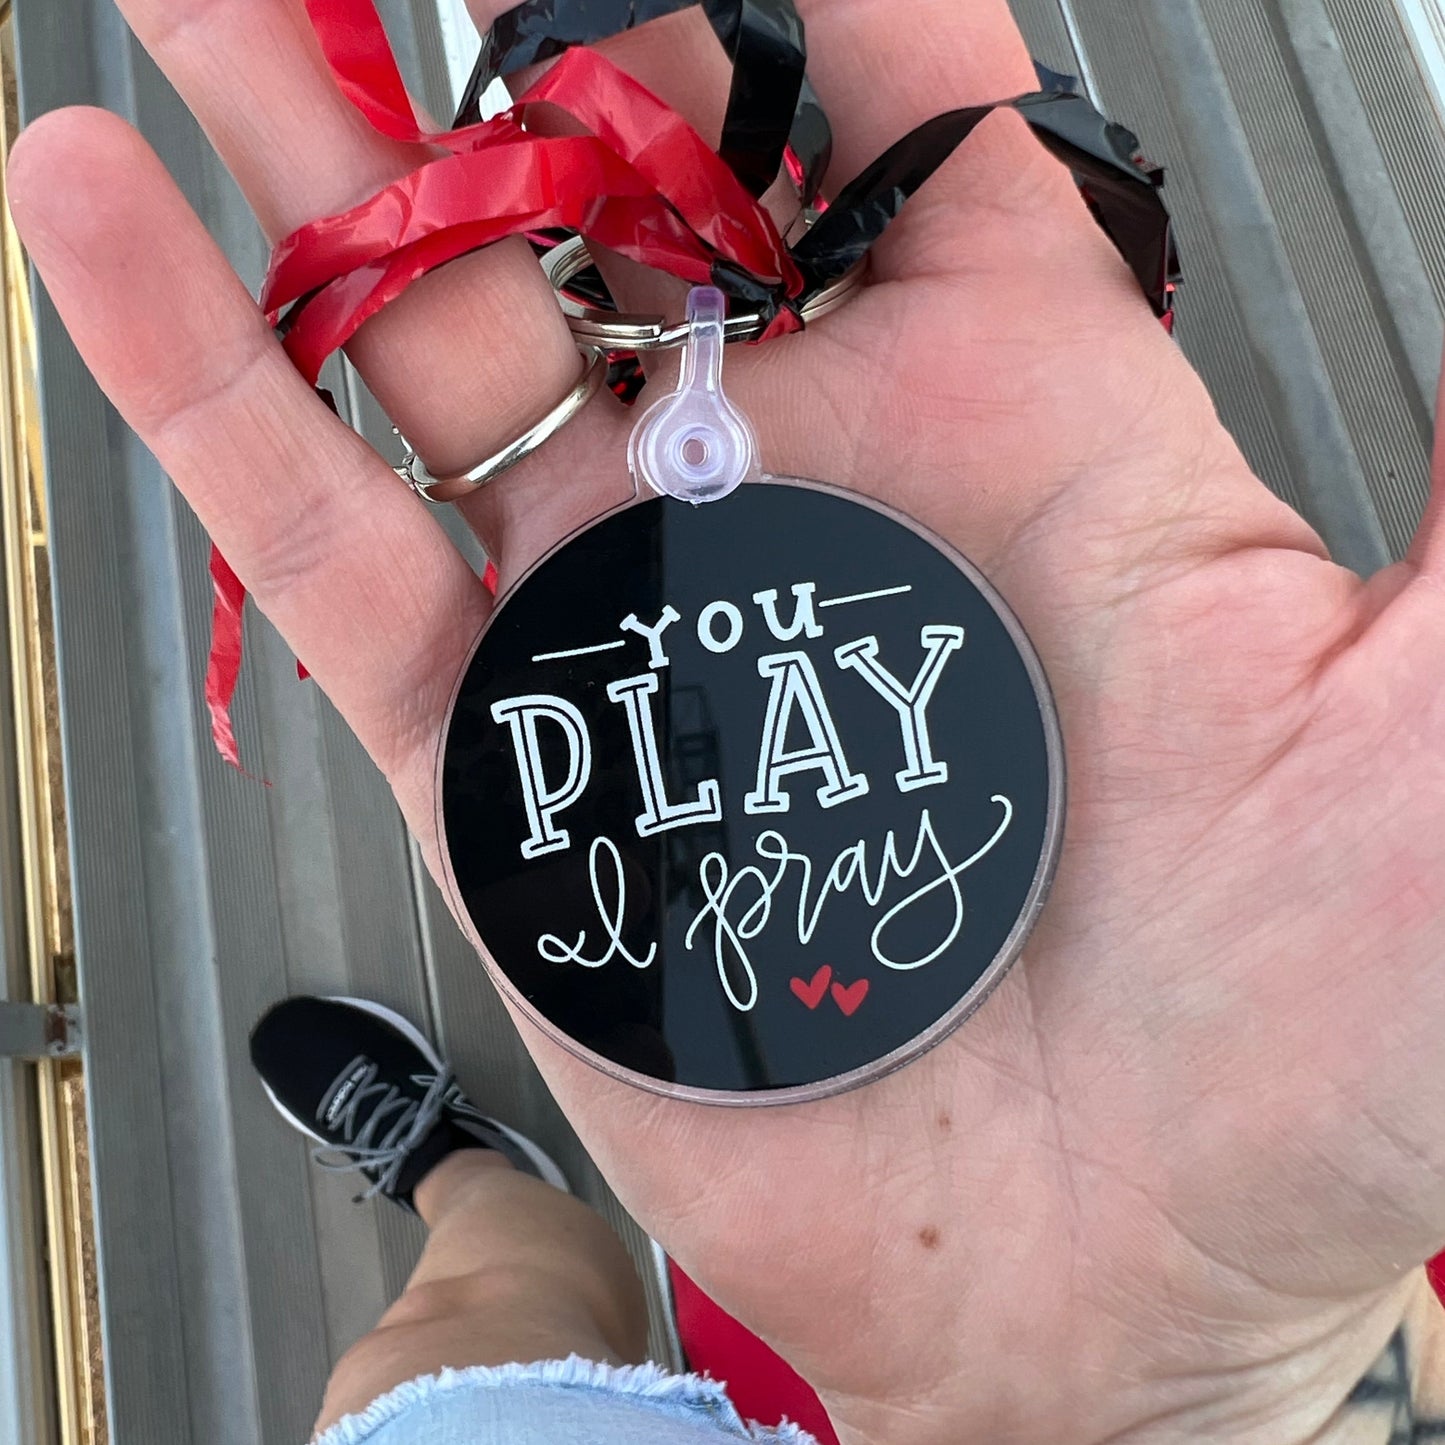 Keychain: “You play, I pray” (RED)